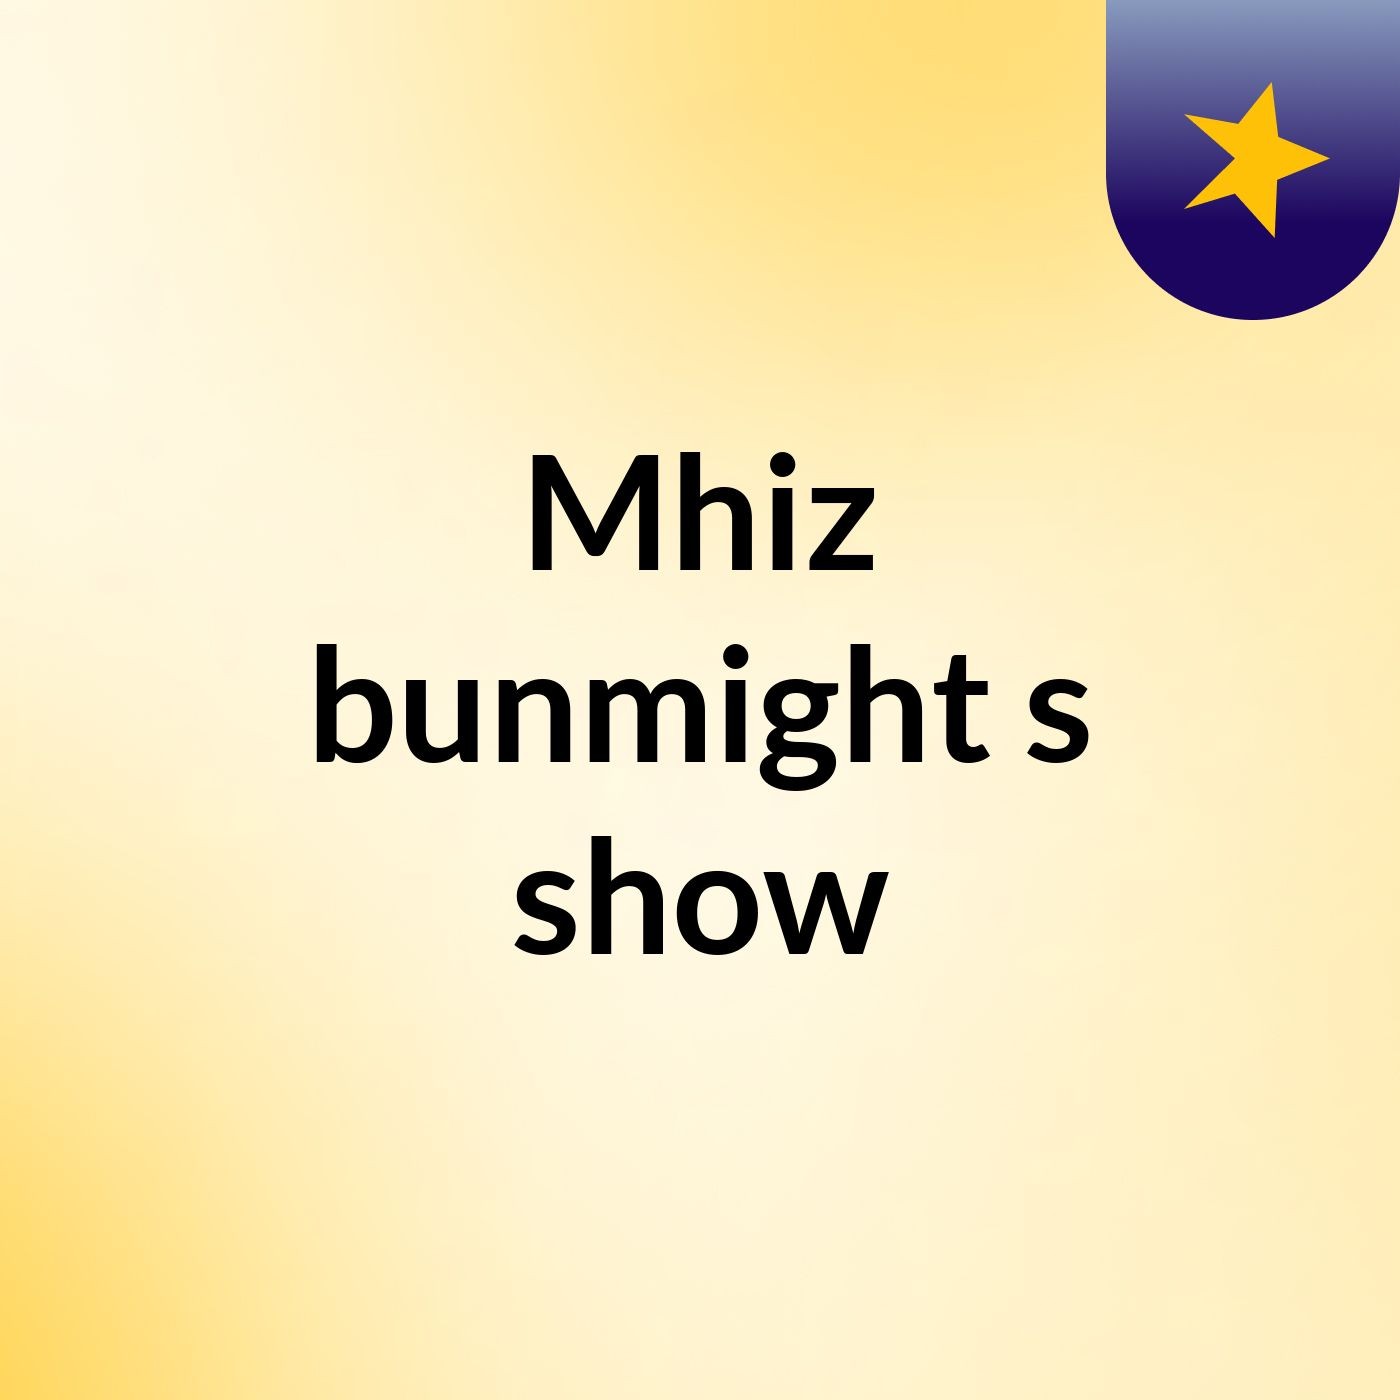 Mhiz bunmight's show